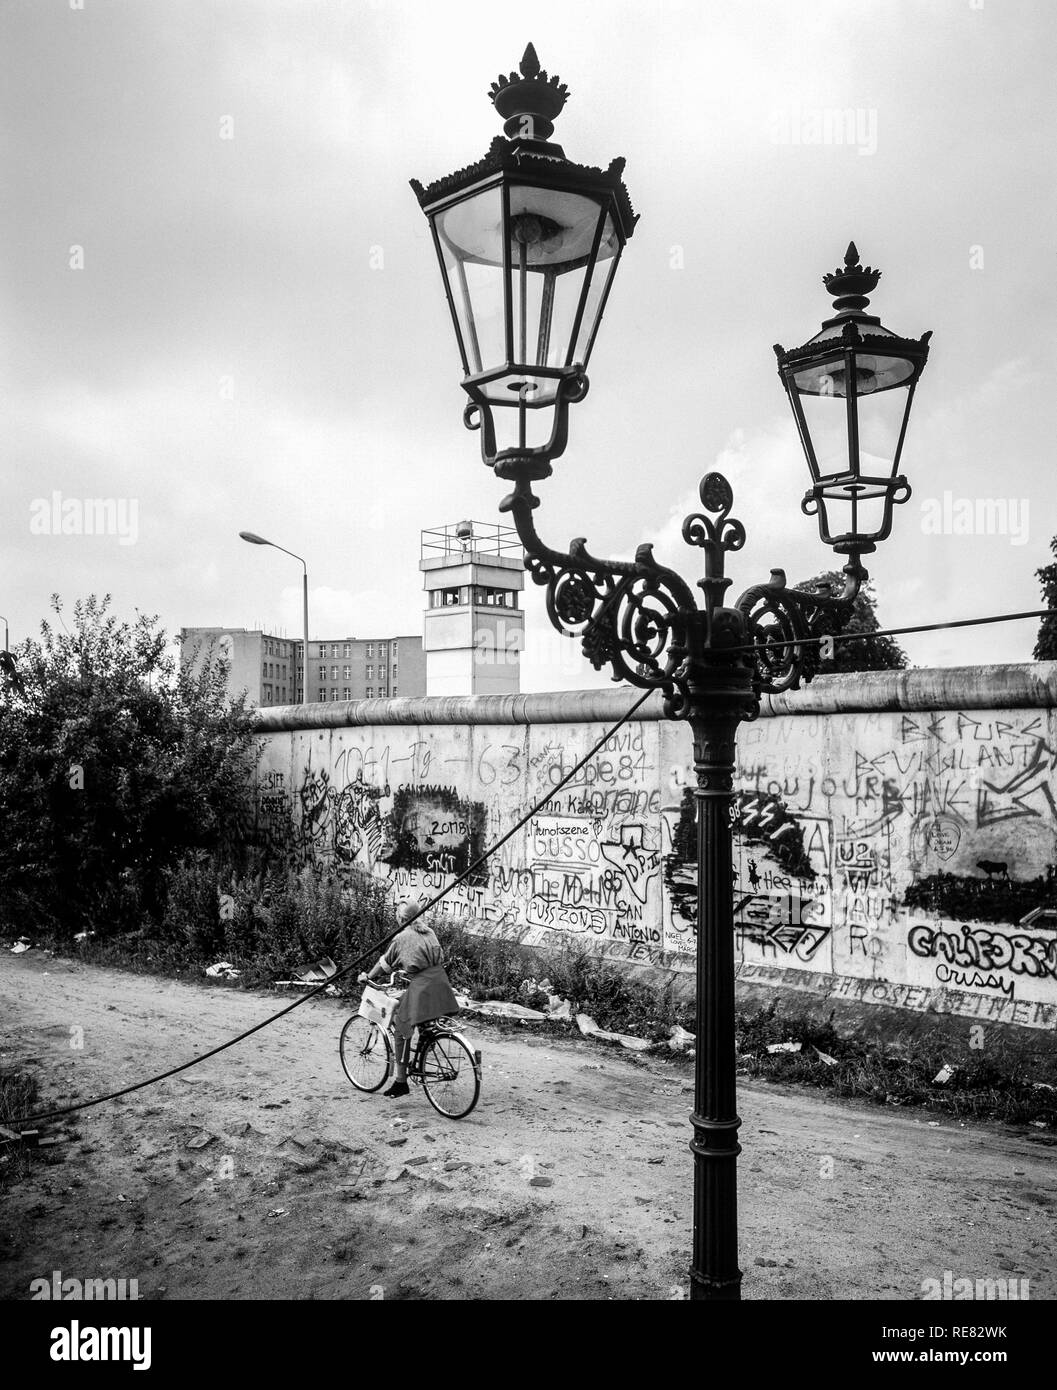 Août 1986 Mur de Berlin, graffitis, lampe de rue, des cyclistes, Berlin est watchtower, rue Zimmerstrasse, Kreuzberg, Berlin Ouest, l'Allemagne, l'Europe, Banque D'Images